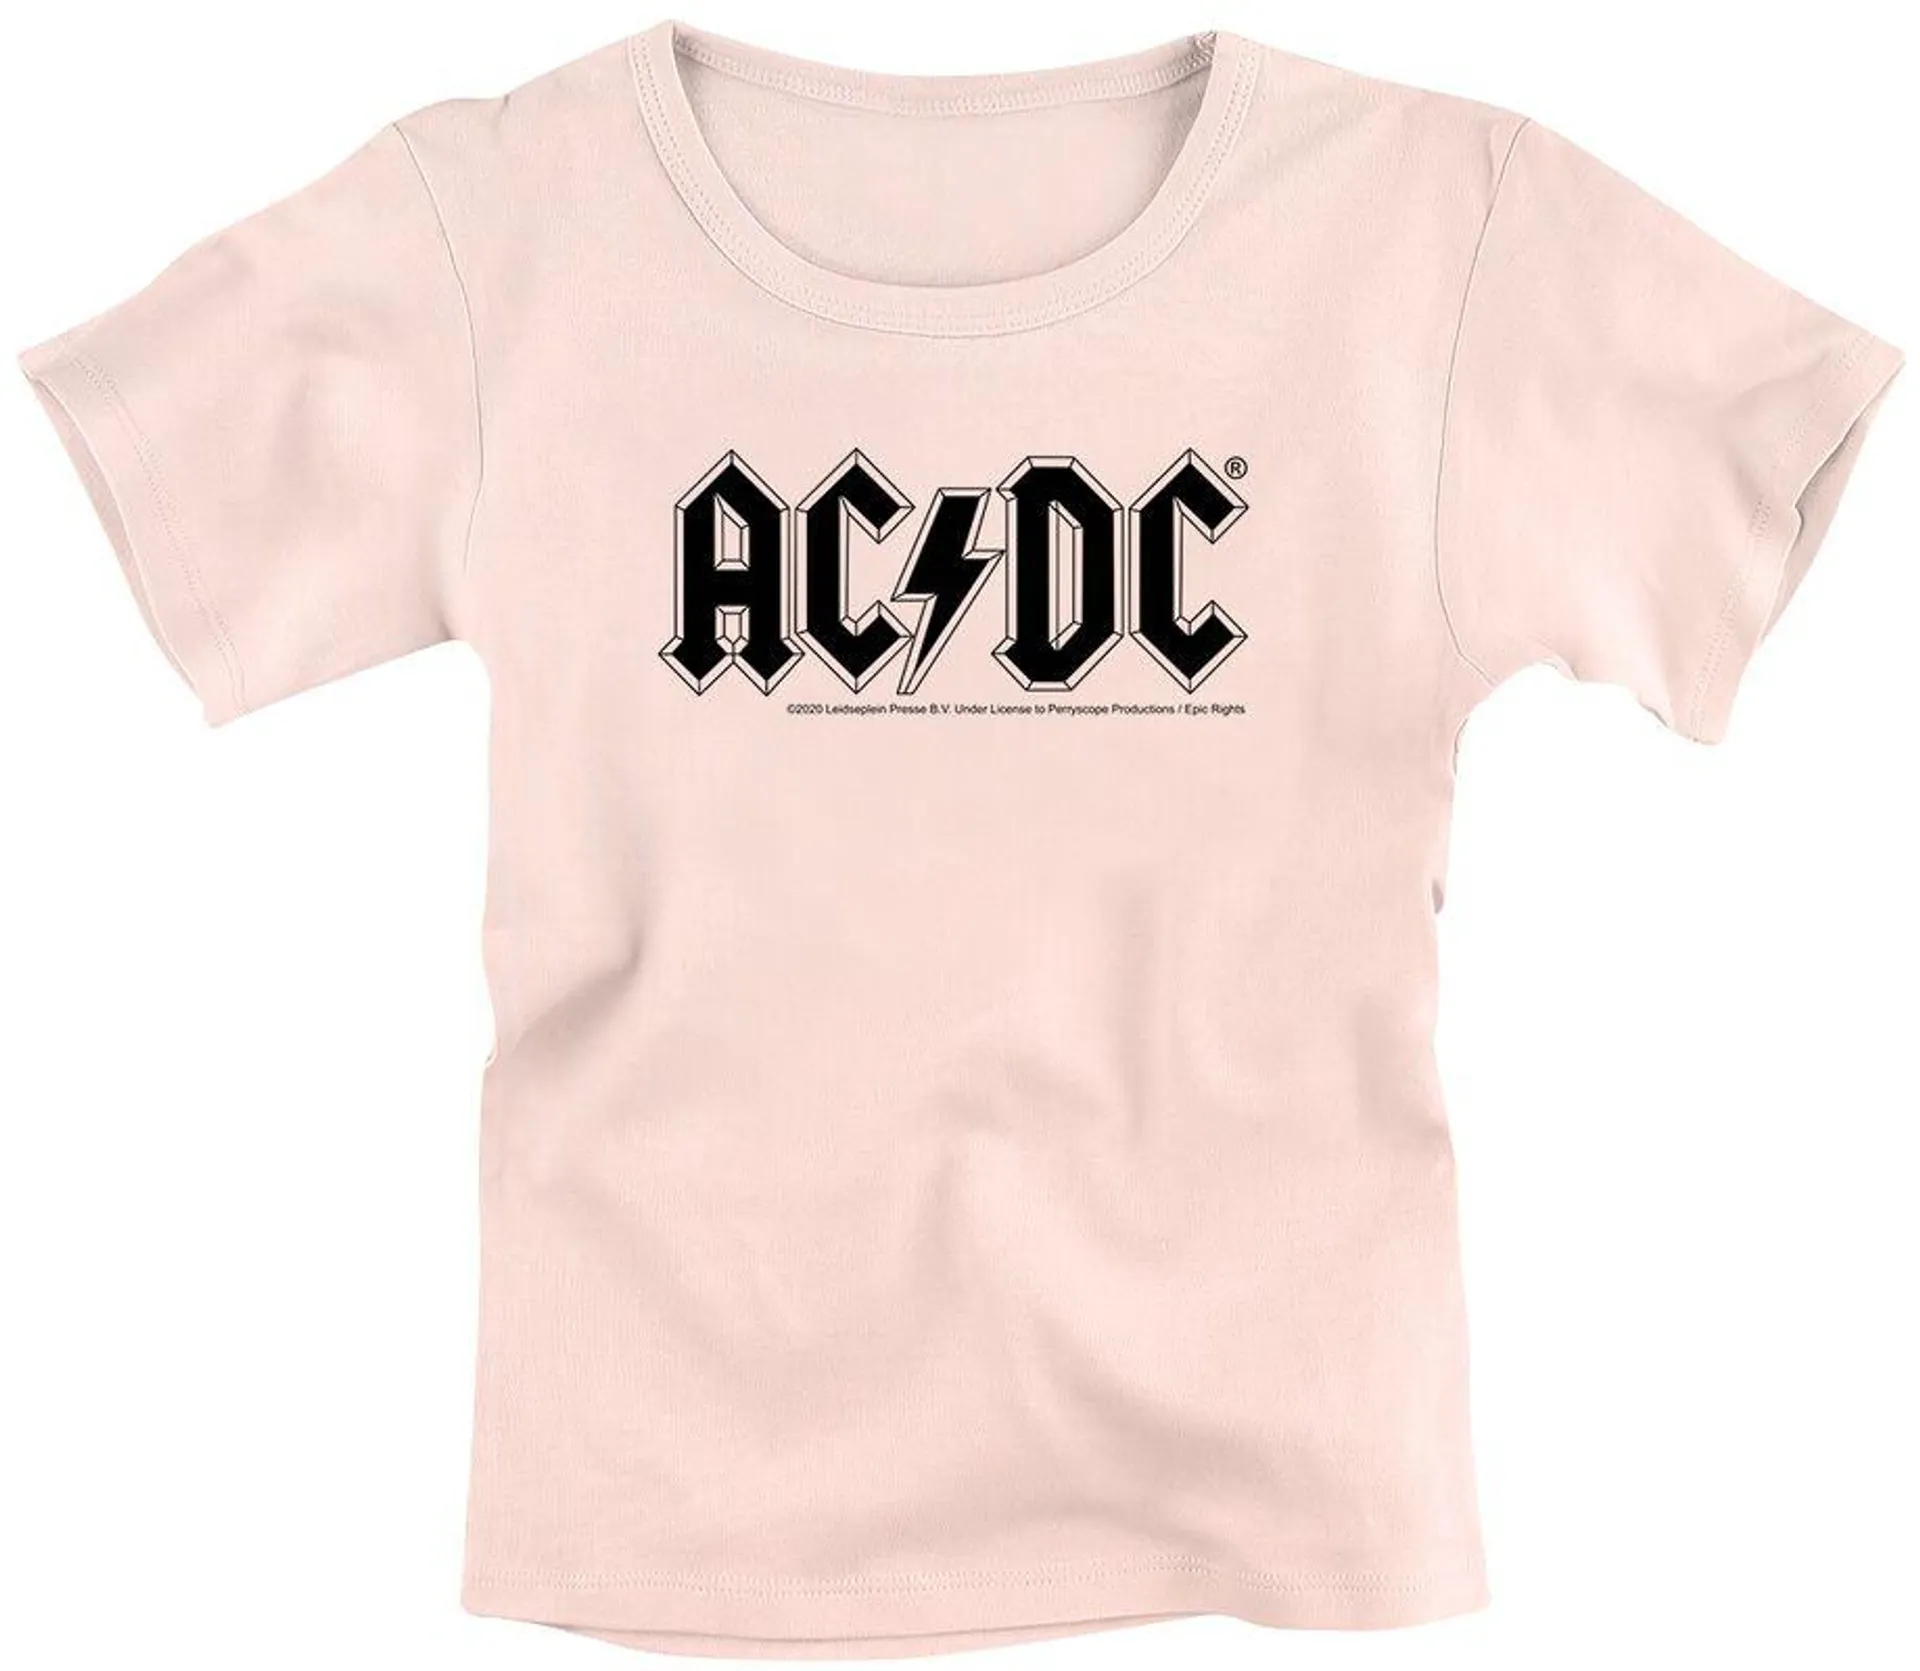 "Metal-Kids - Logo" Camiseta Rosa de AC/DC